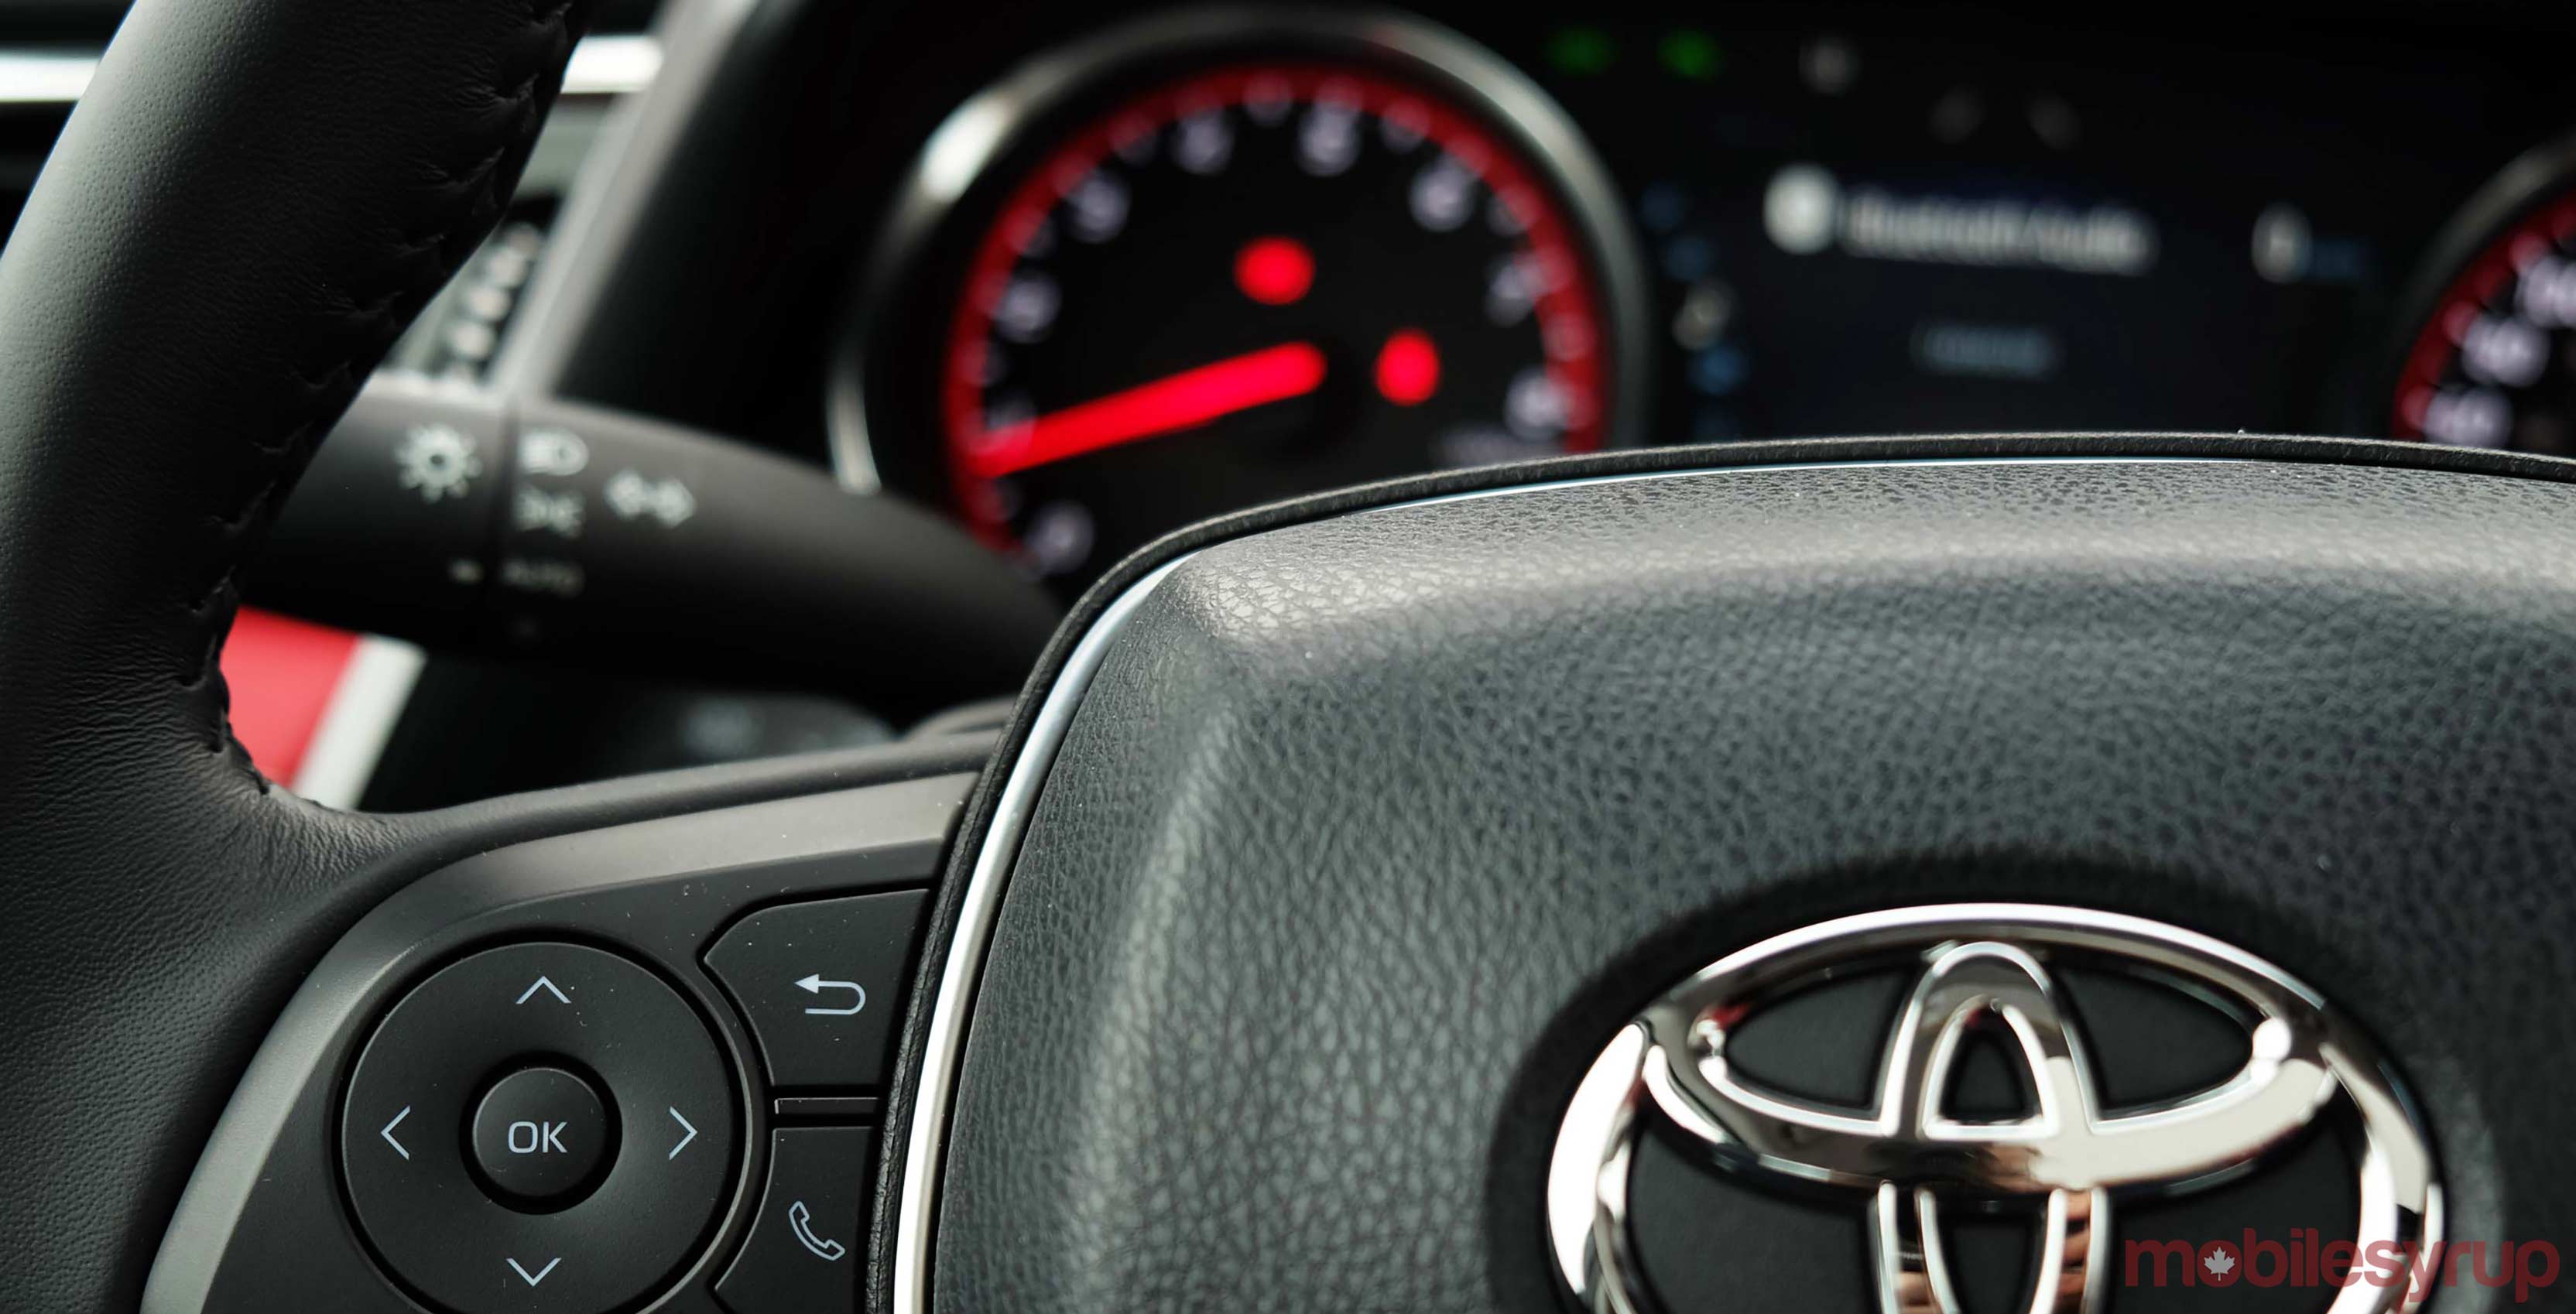 Toyota steering wheel controls